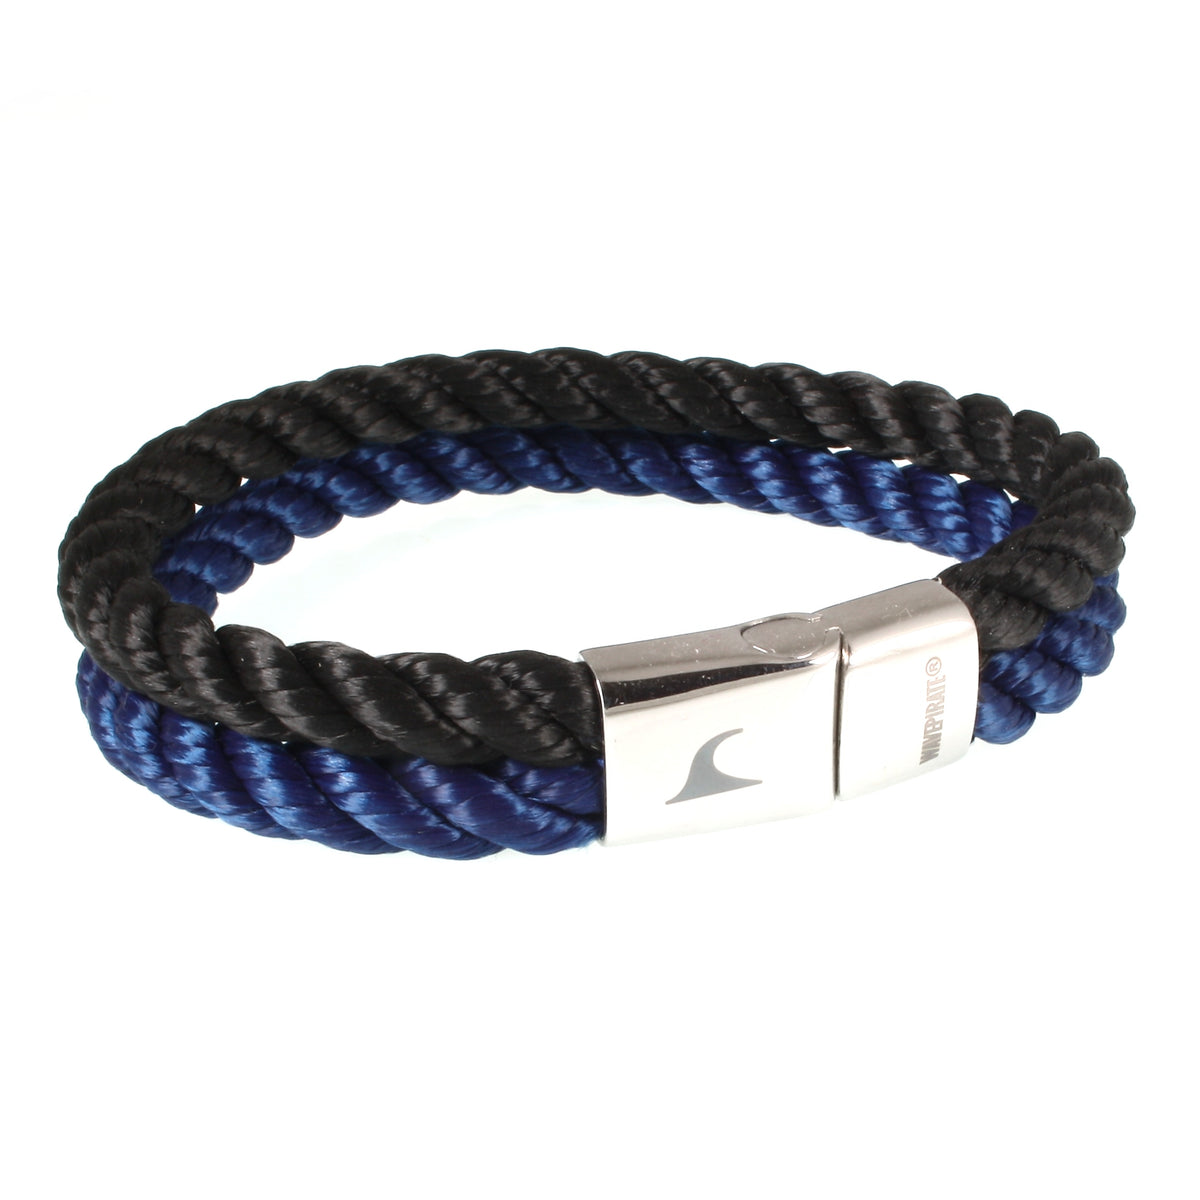 Herren-Segeltau-Armband-Tarifa-schwarz-koenigsblau-geflochten-Kordel-Edelstahlverschluss-vorn-wavepirate-shop-k